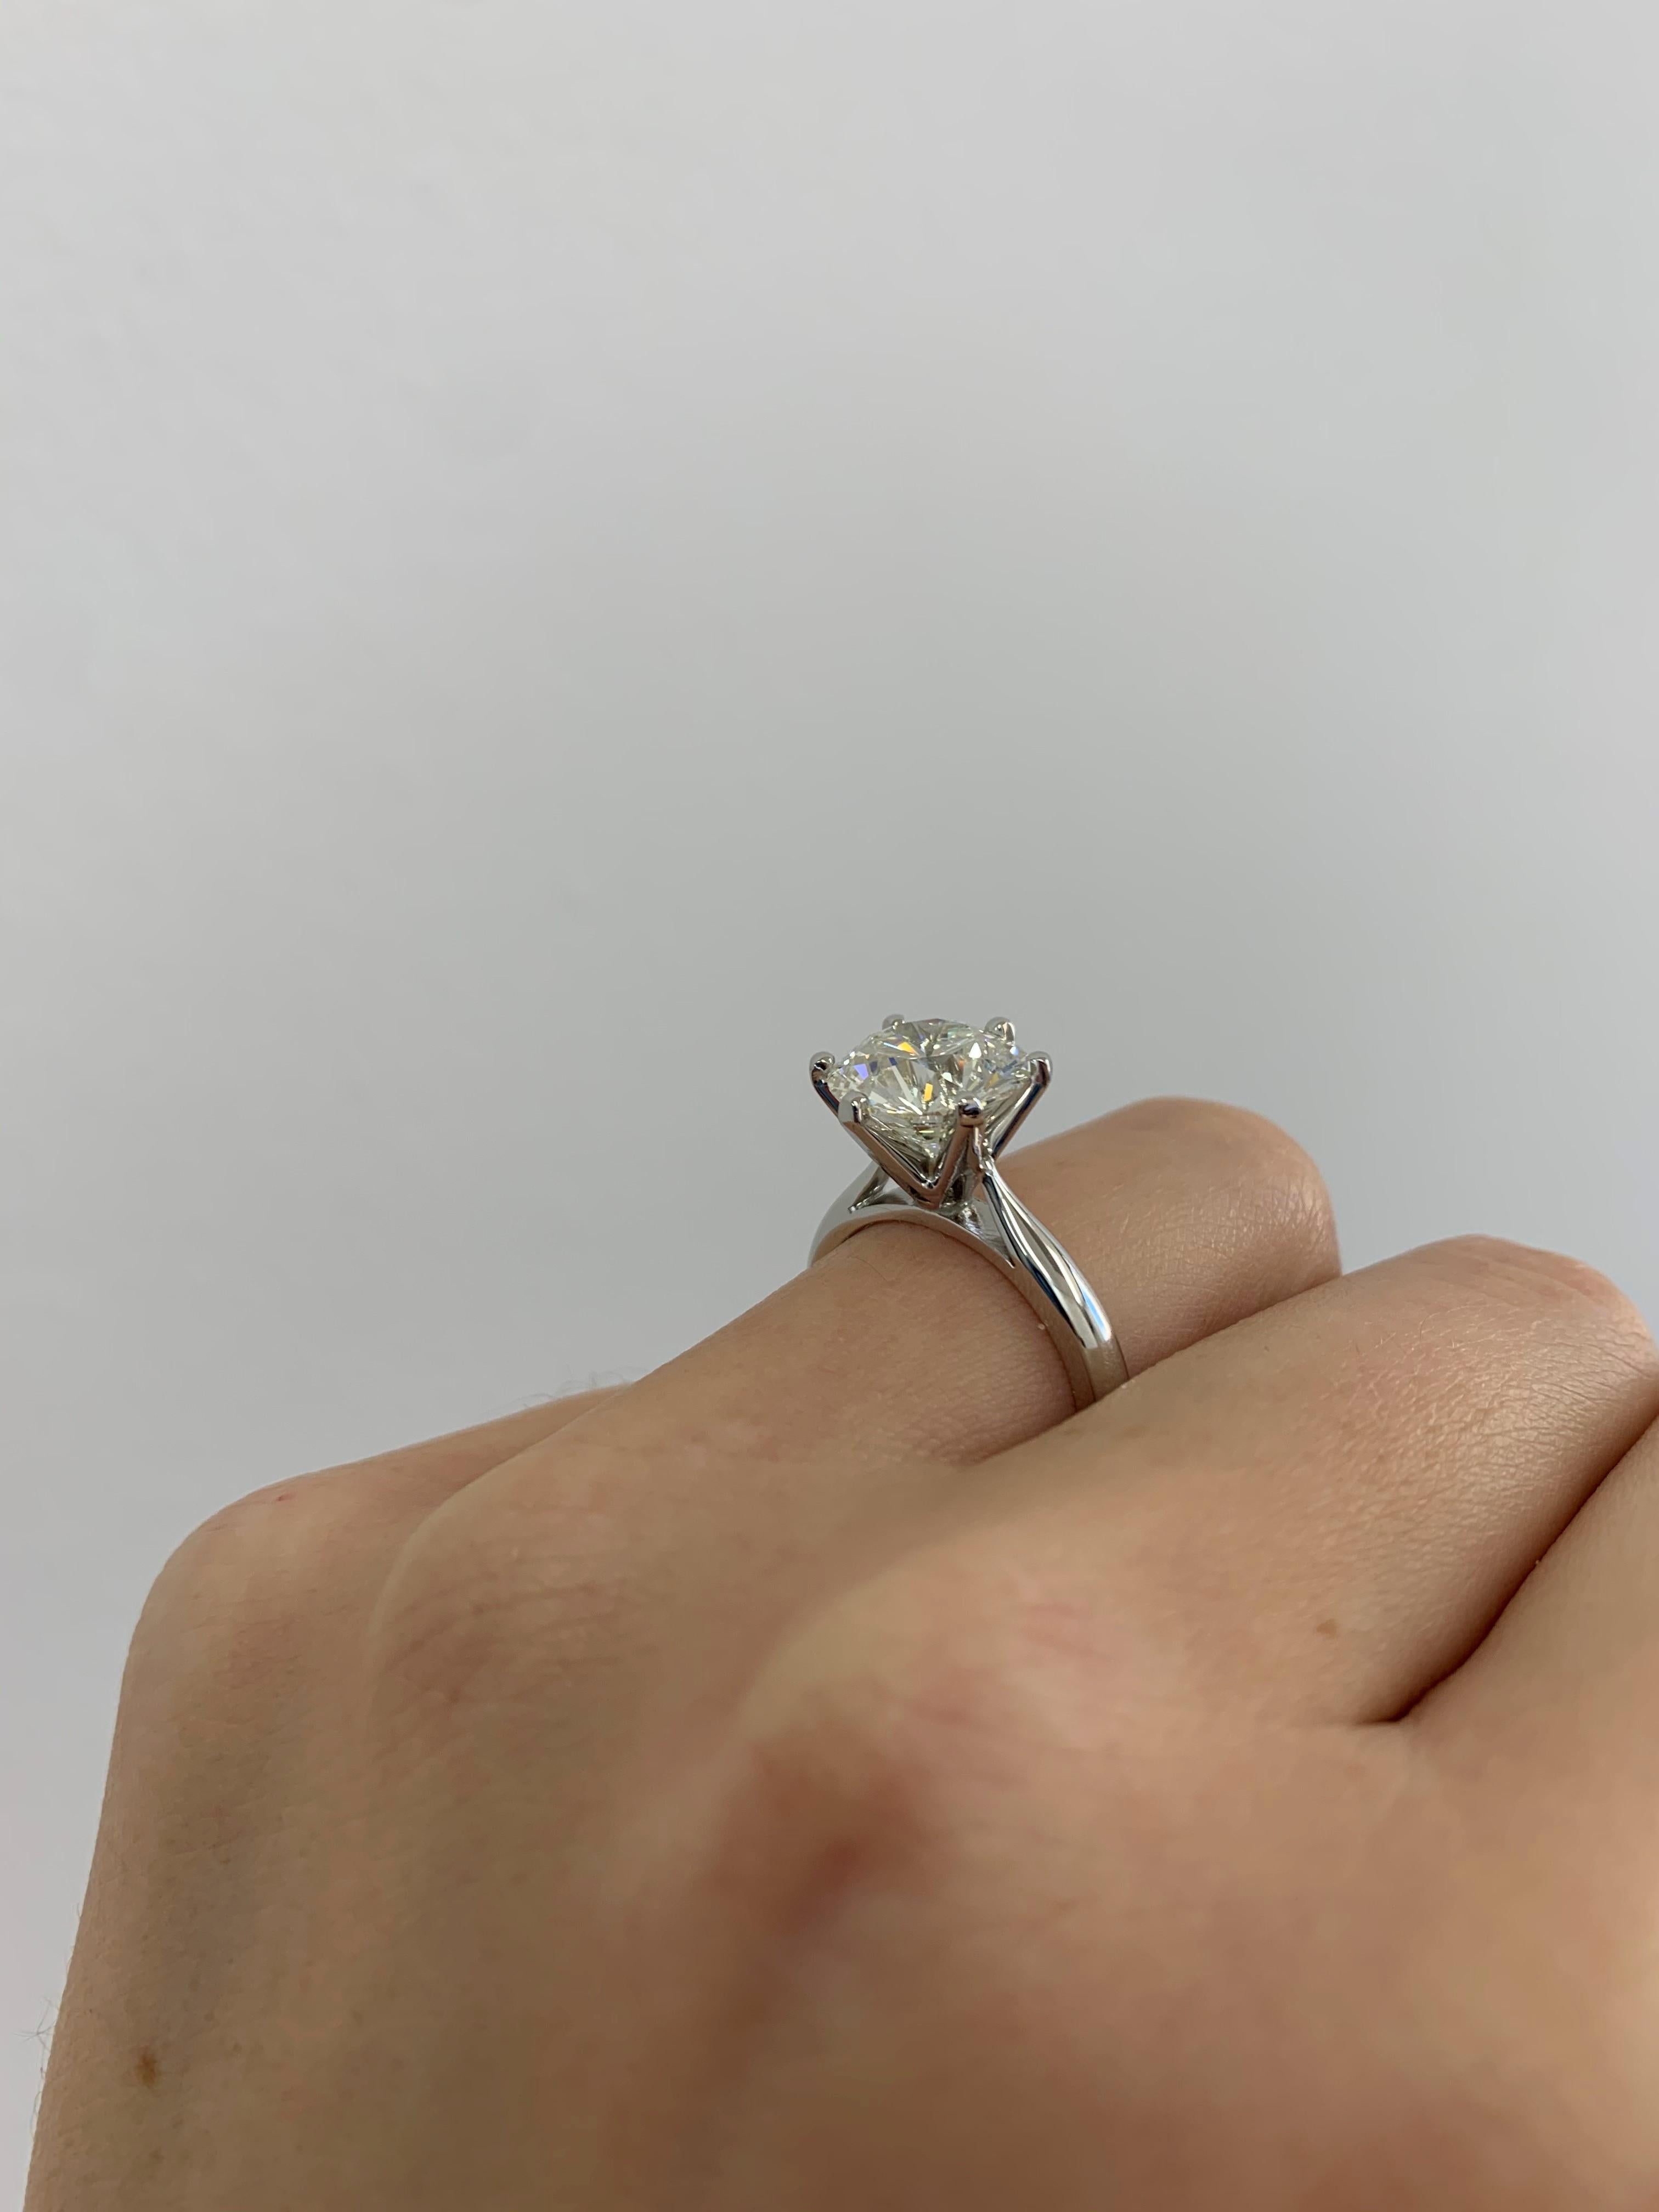 Women's EGL Certified 3.53 Carat Round Brilliant Diamond Ring For Sale